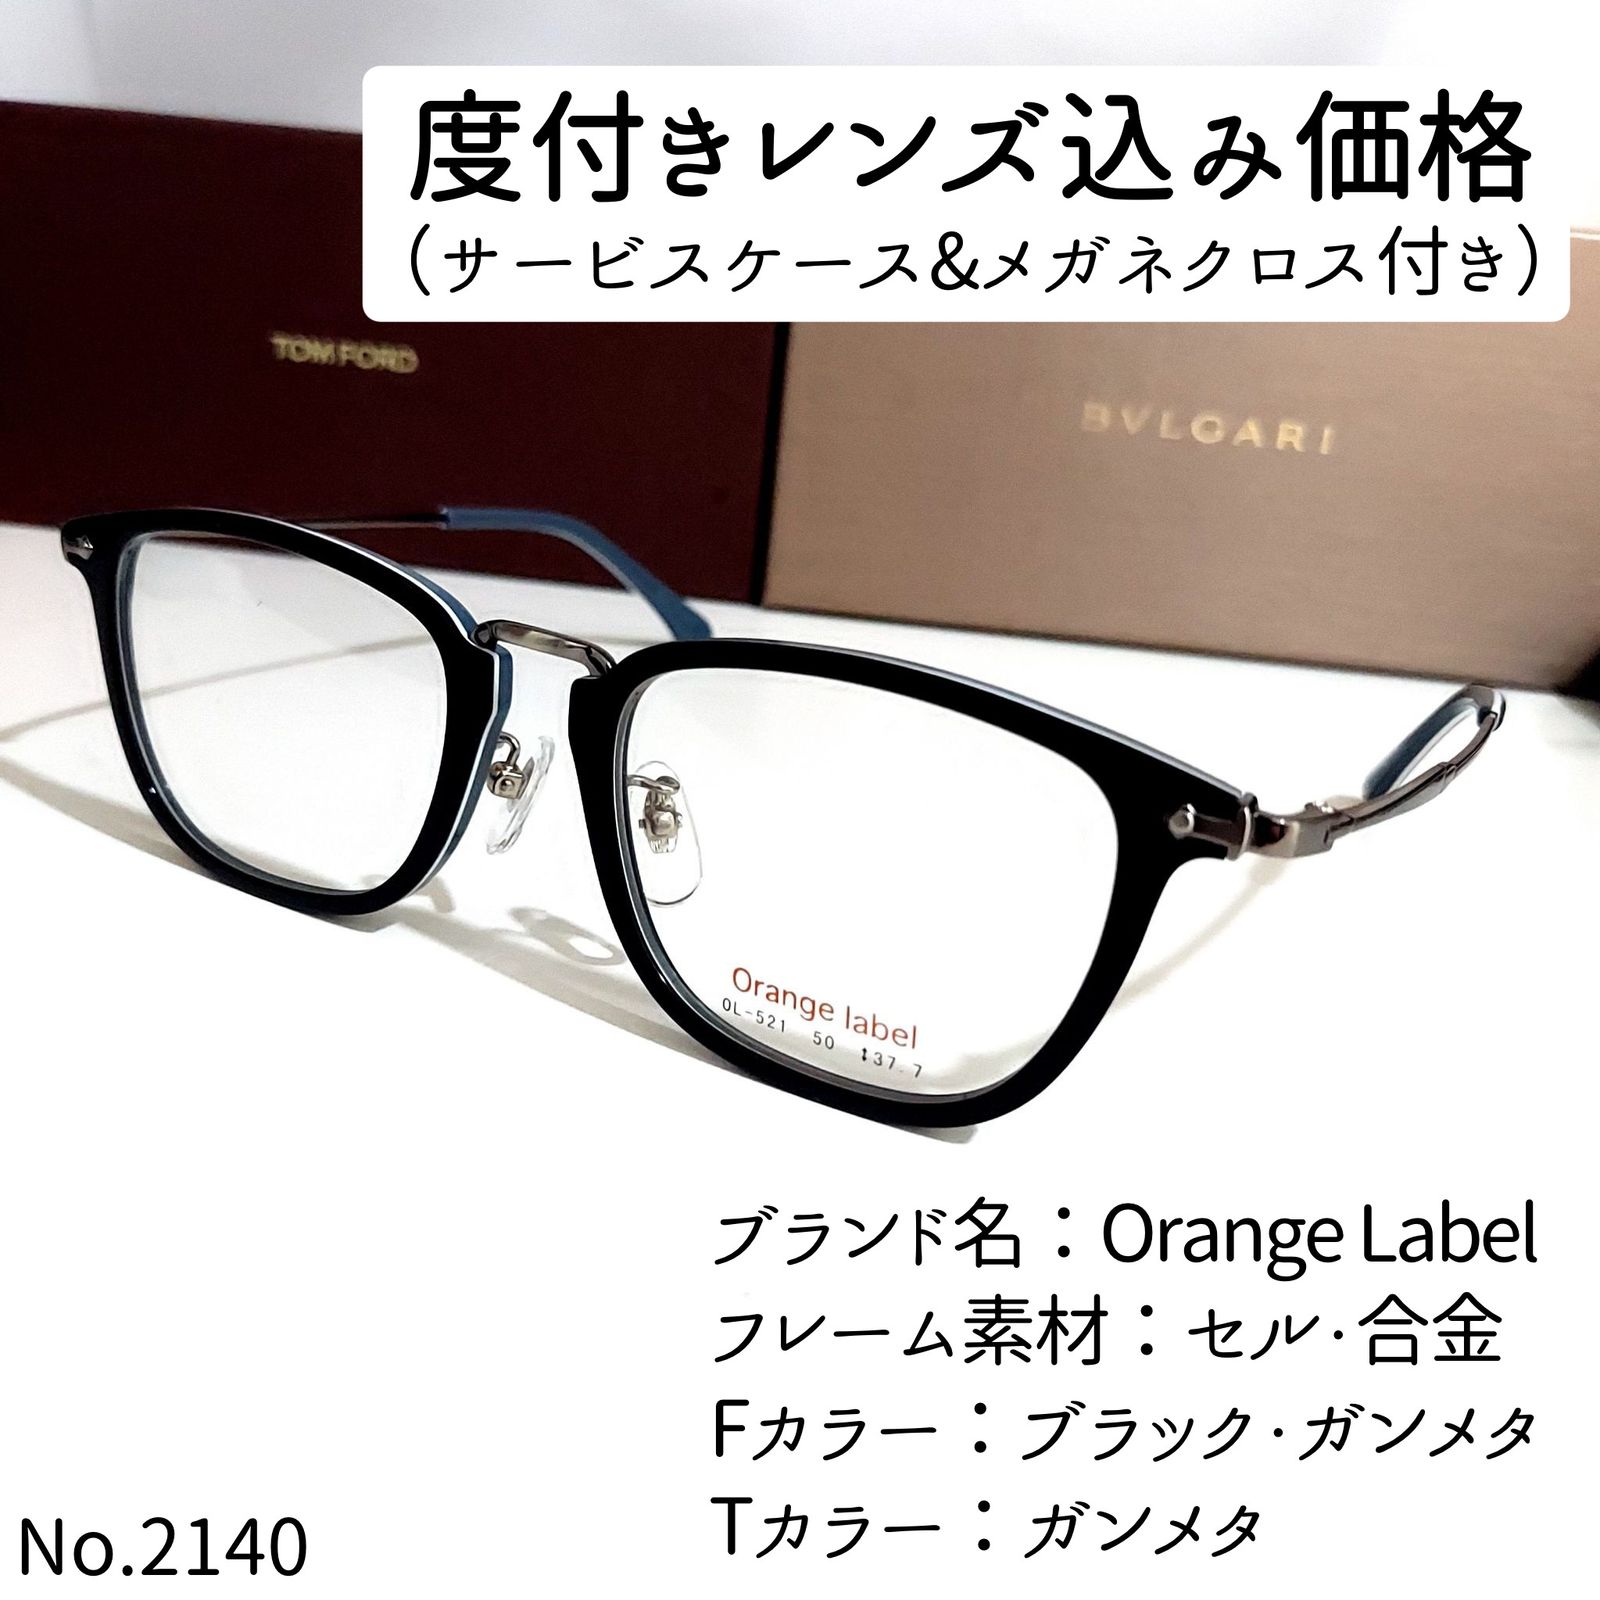 No.2140+メガネ　Orange Label【度数入り込み価格】